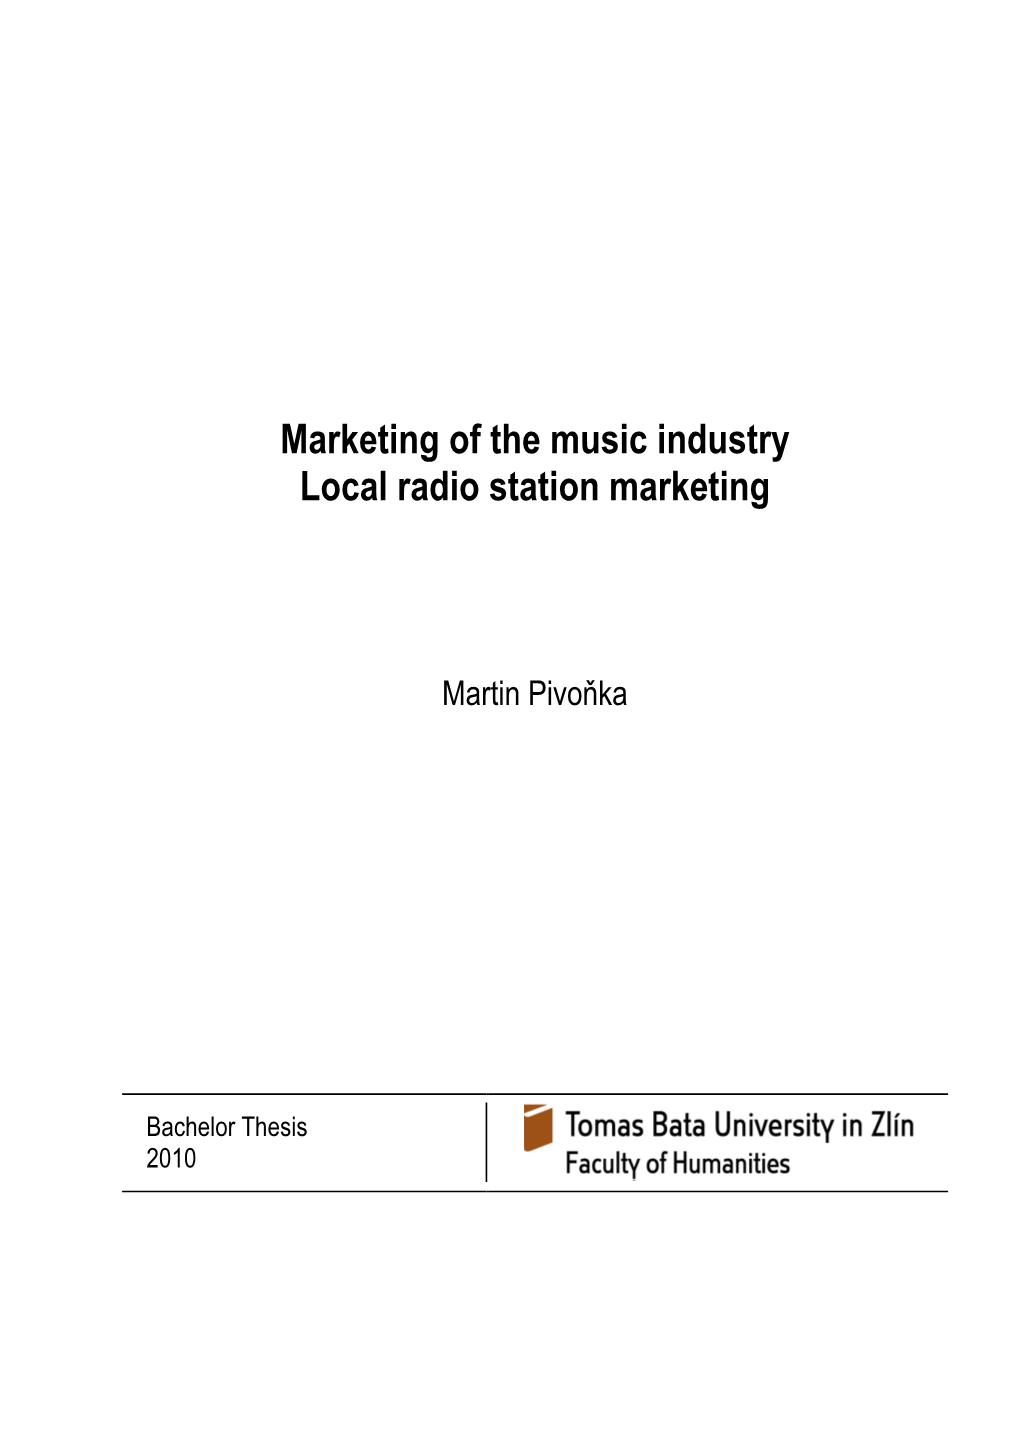 Marketing of the Music Industry Local Radio Station Marketing